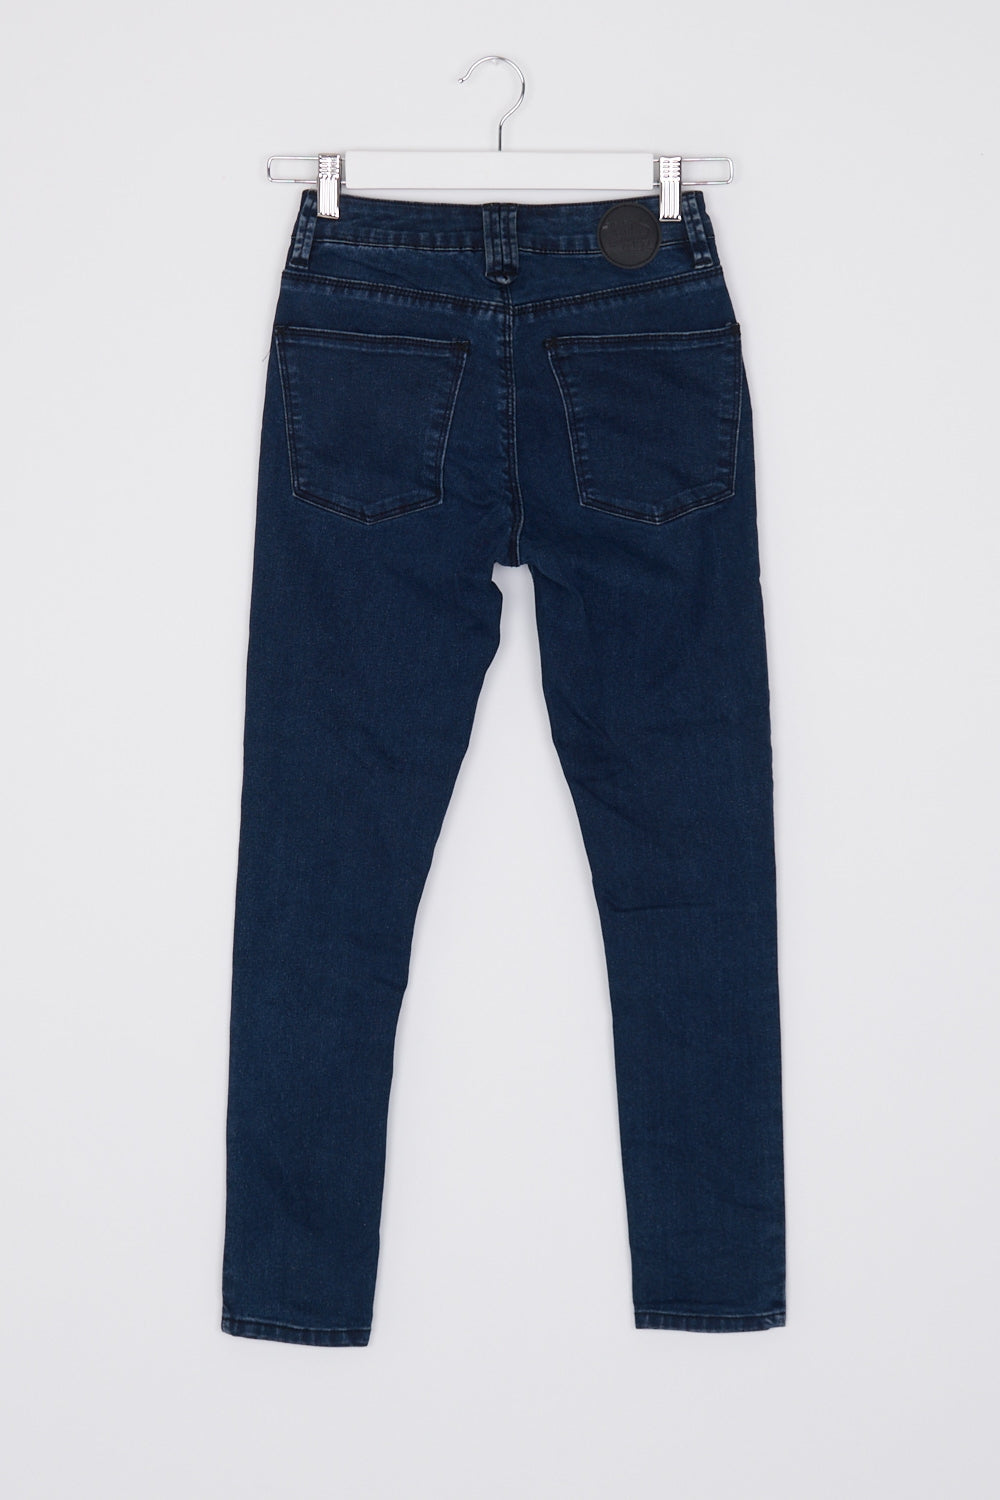 RES Denim Blue Petite Skinny Leg Jeans AU 7 / 25